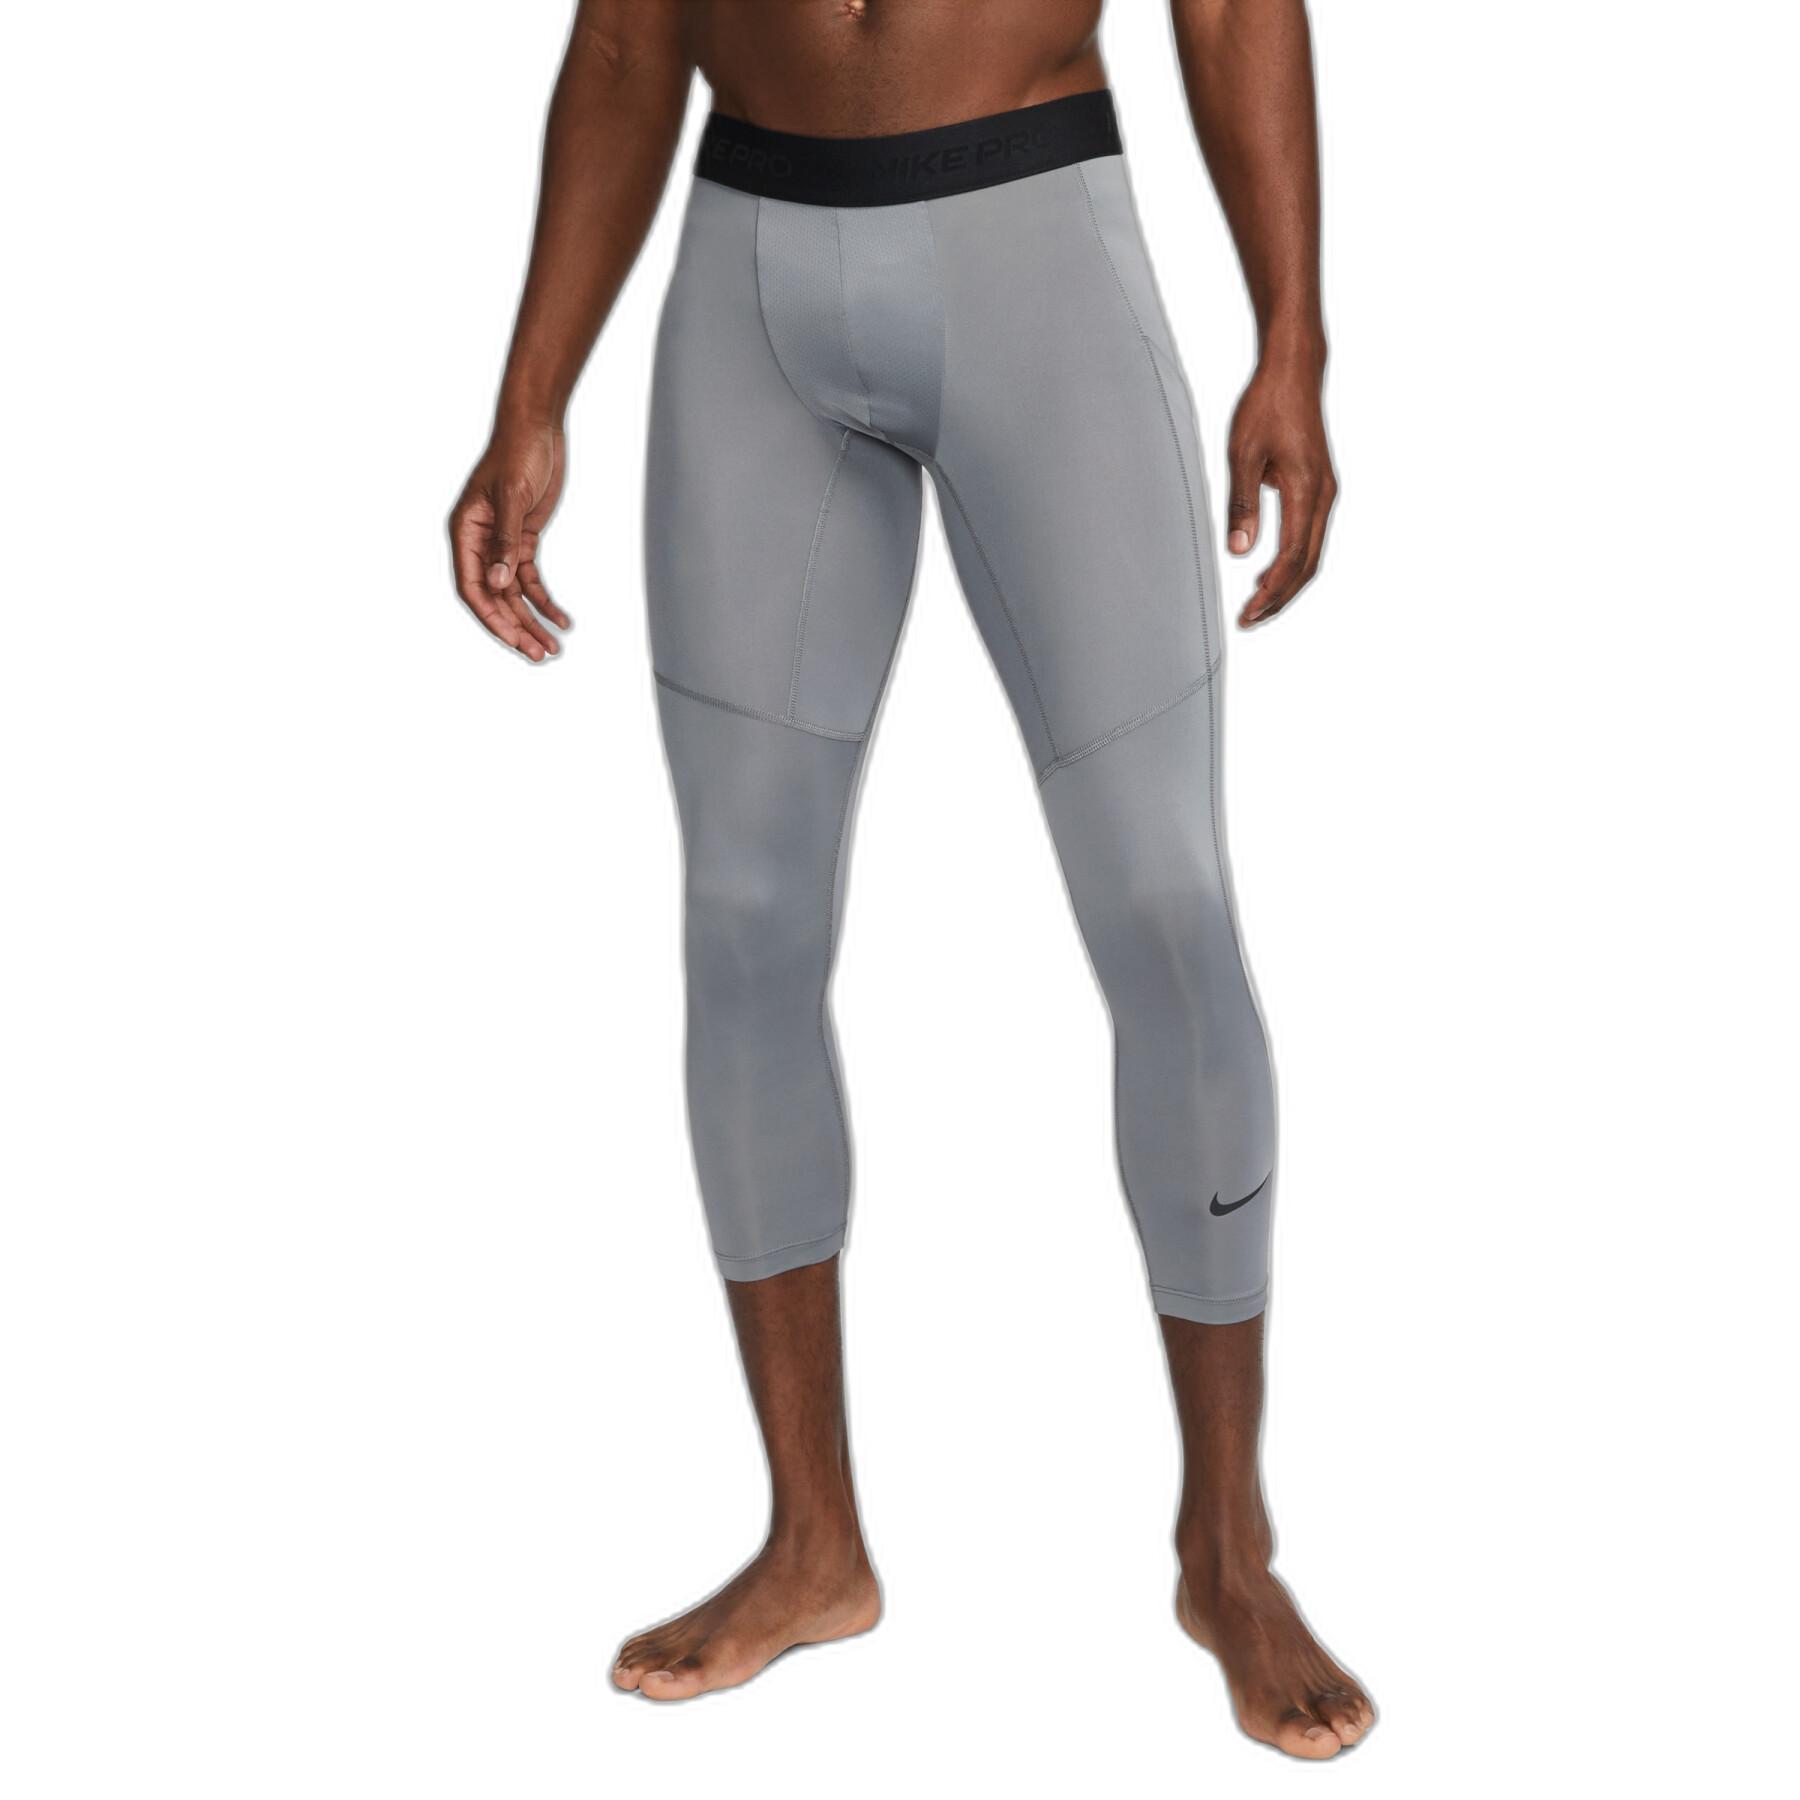 3/4 leggings Nike Dri-FIT - Baselayers - Textile - Handball wear